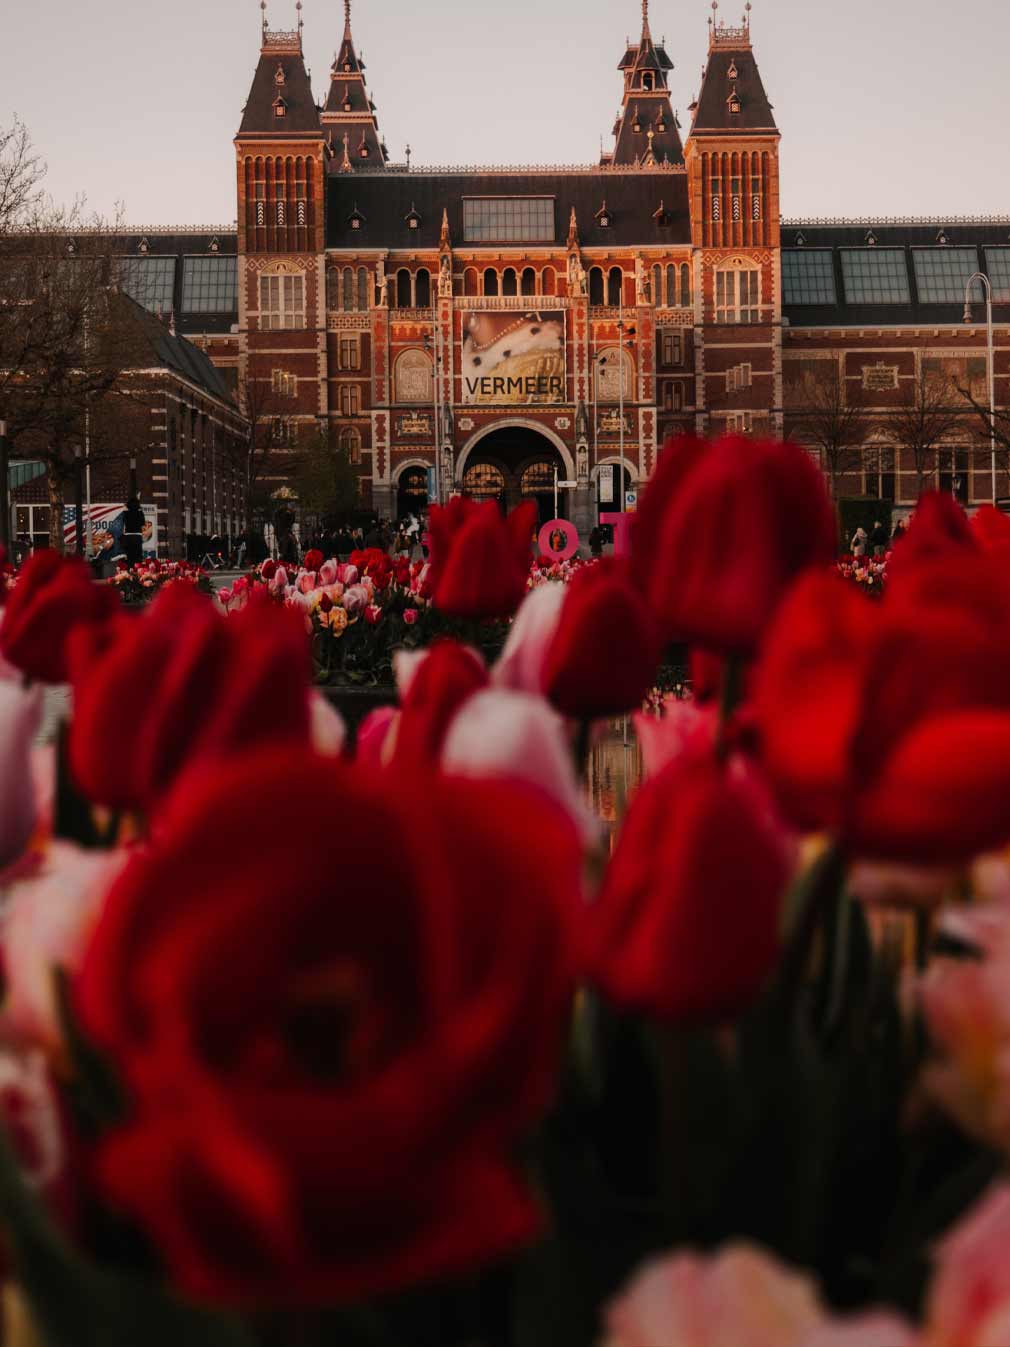 Flowers in front of the Rijksmuseum